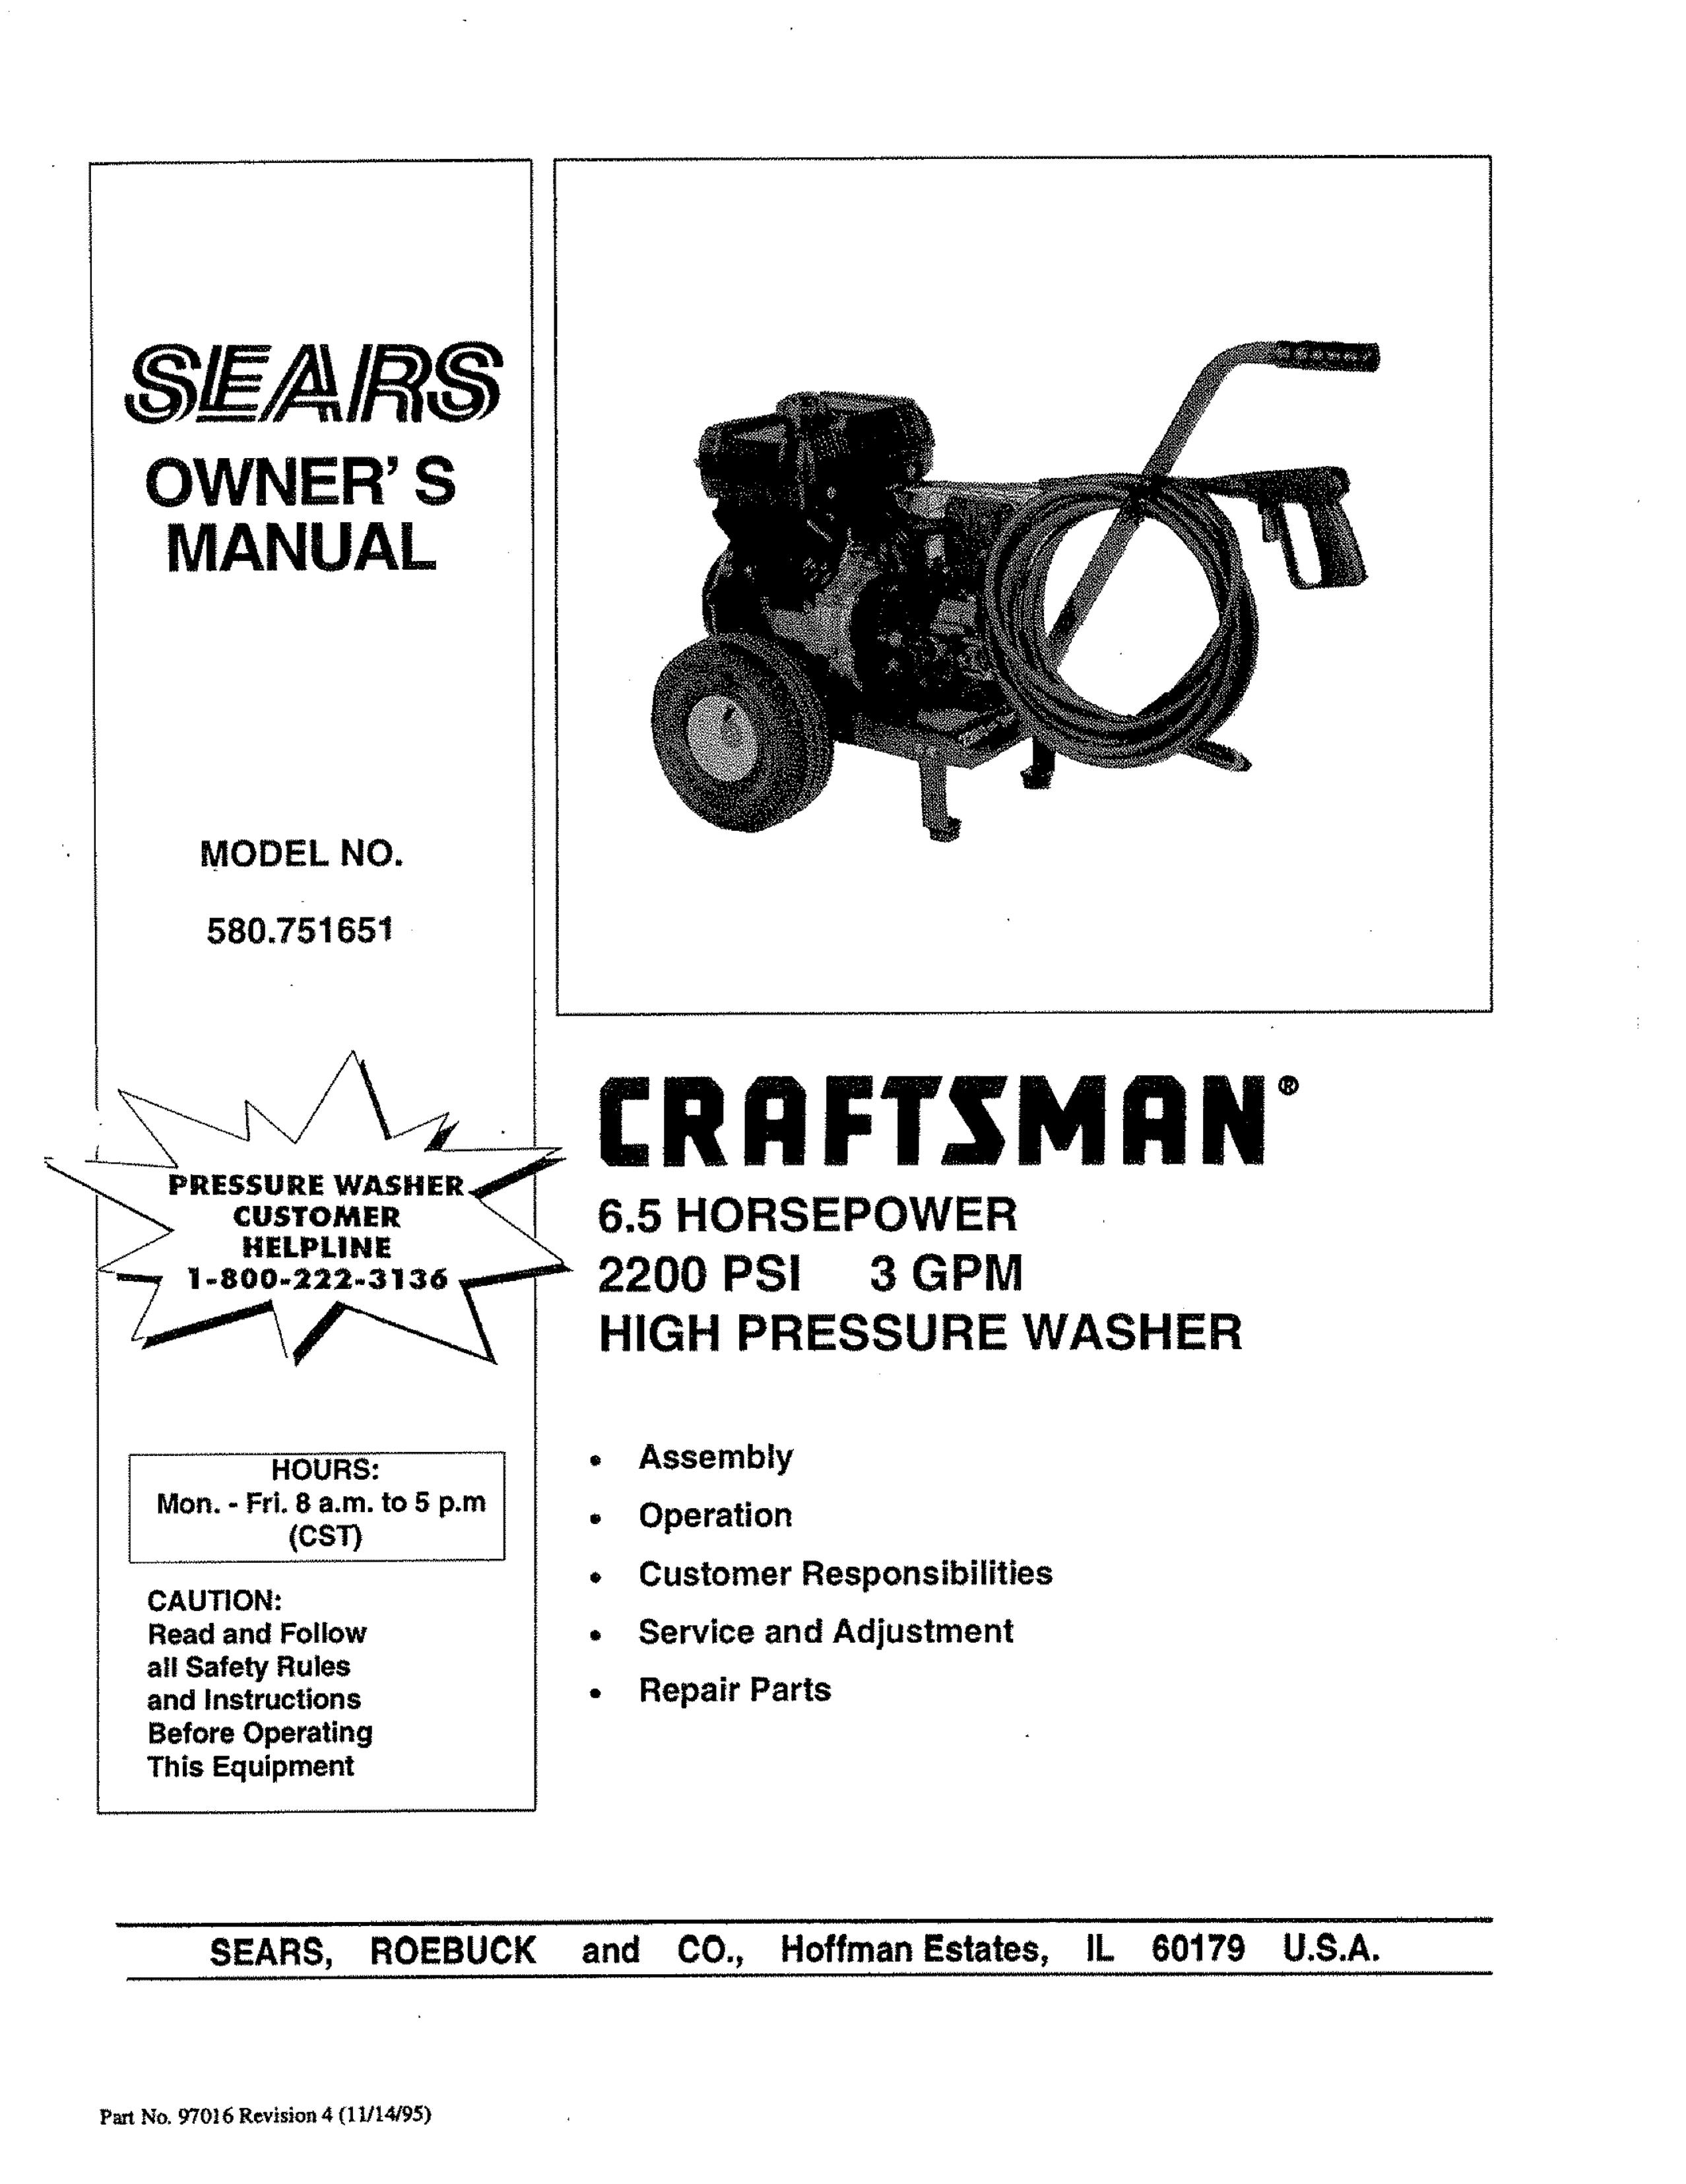 Craftsman 580.751651 Pressure Washer User Manual